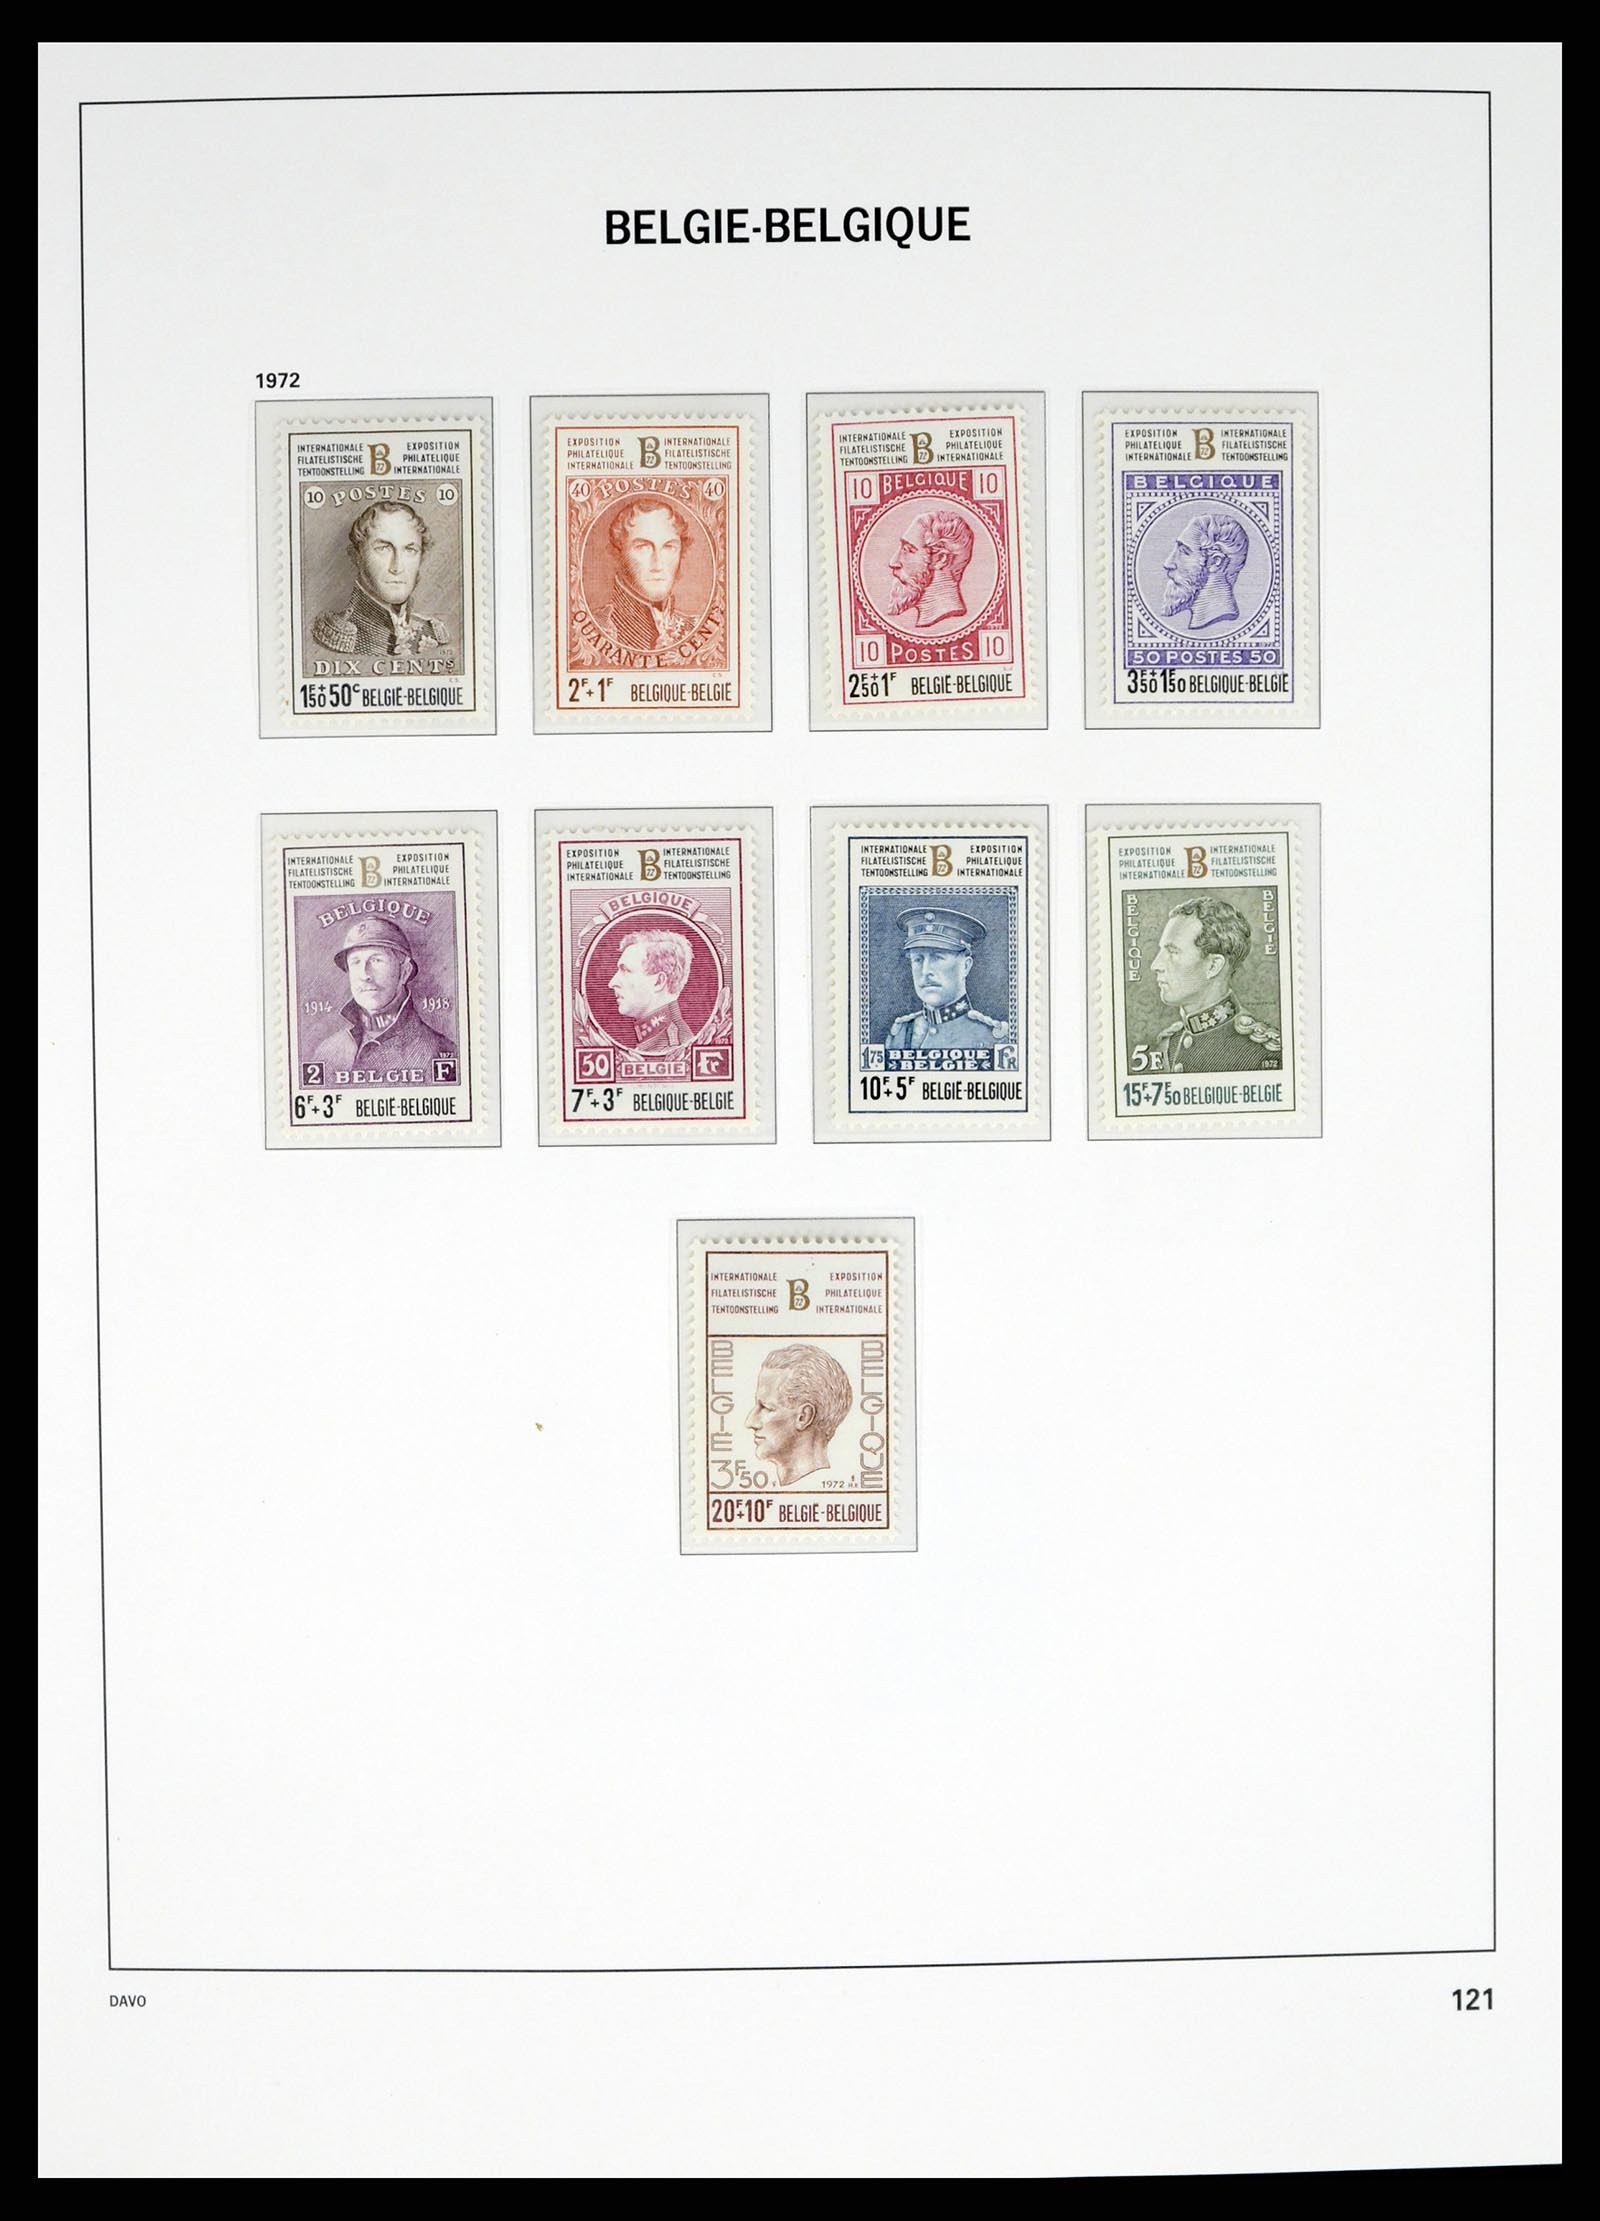 37368 010 - Stamp collection 37368 Belgium 1969-2003.